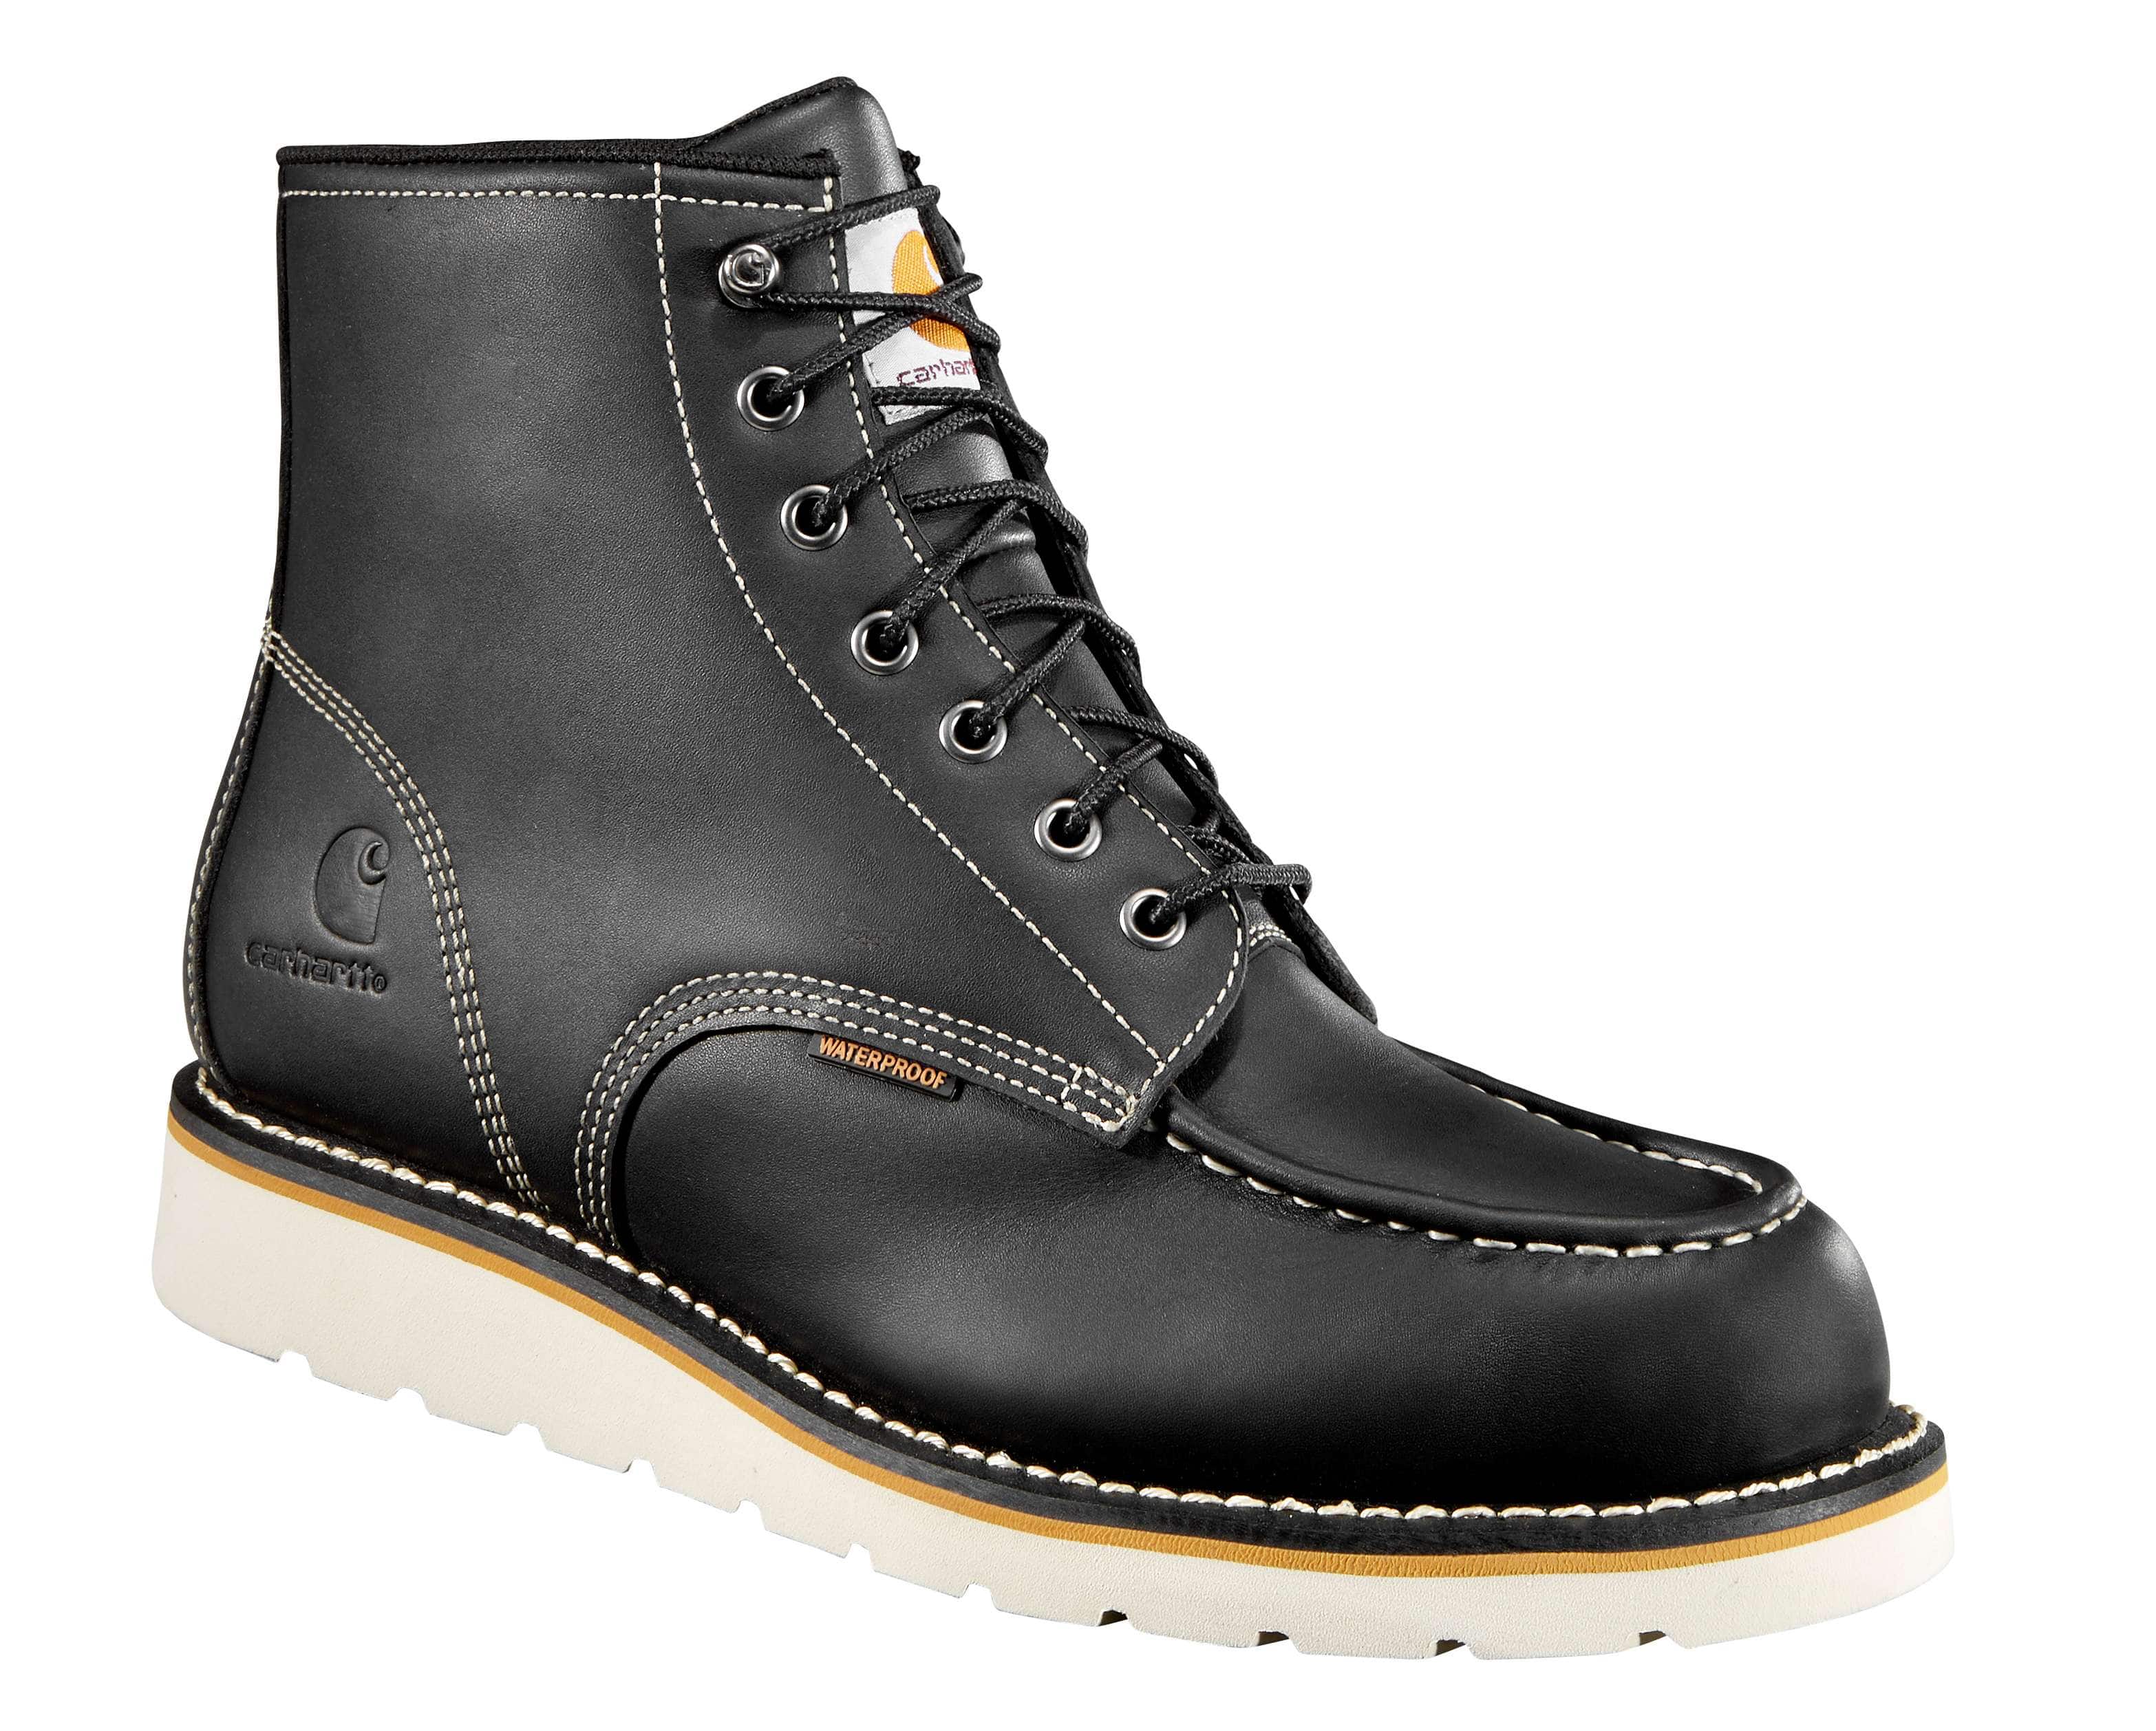 black diamond carhartt boots